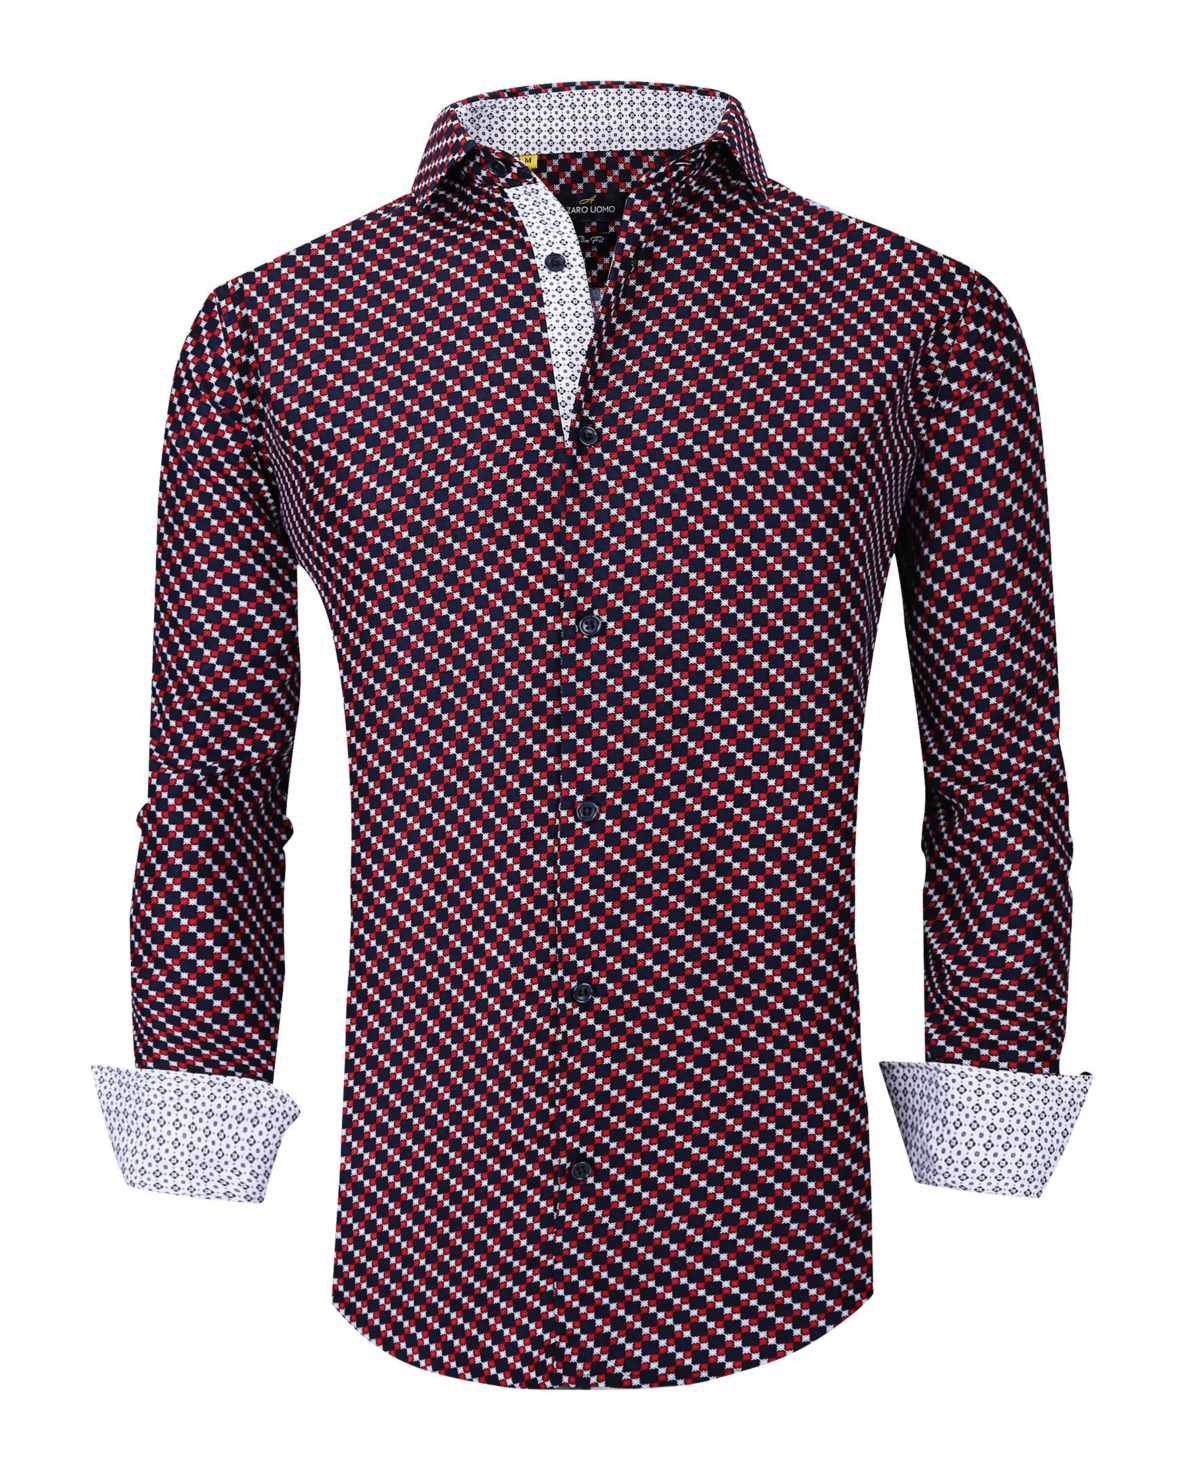 Azaro Uomo Men's Slim Fit Business Nautical Button Down Dress Shirt